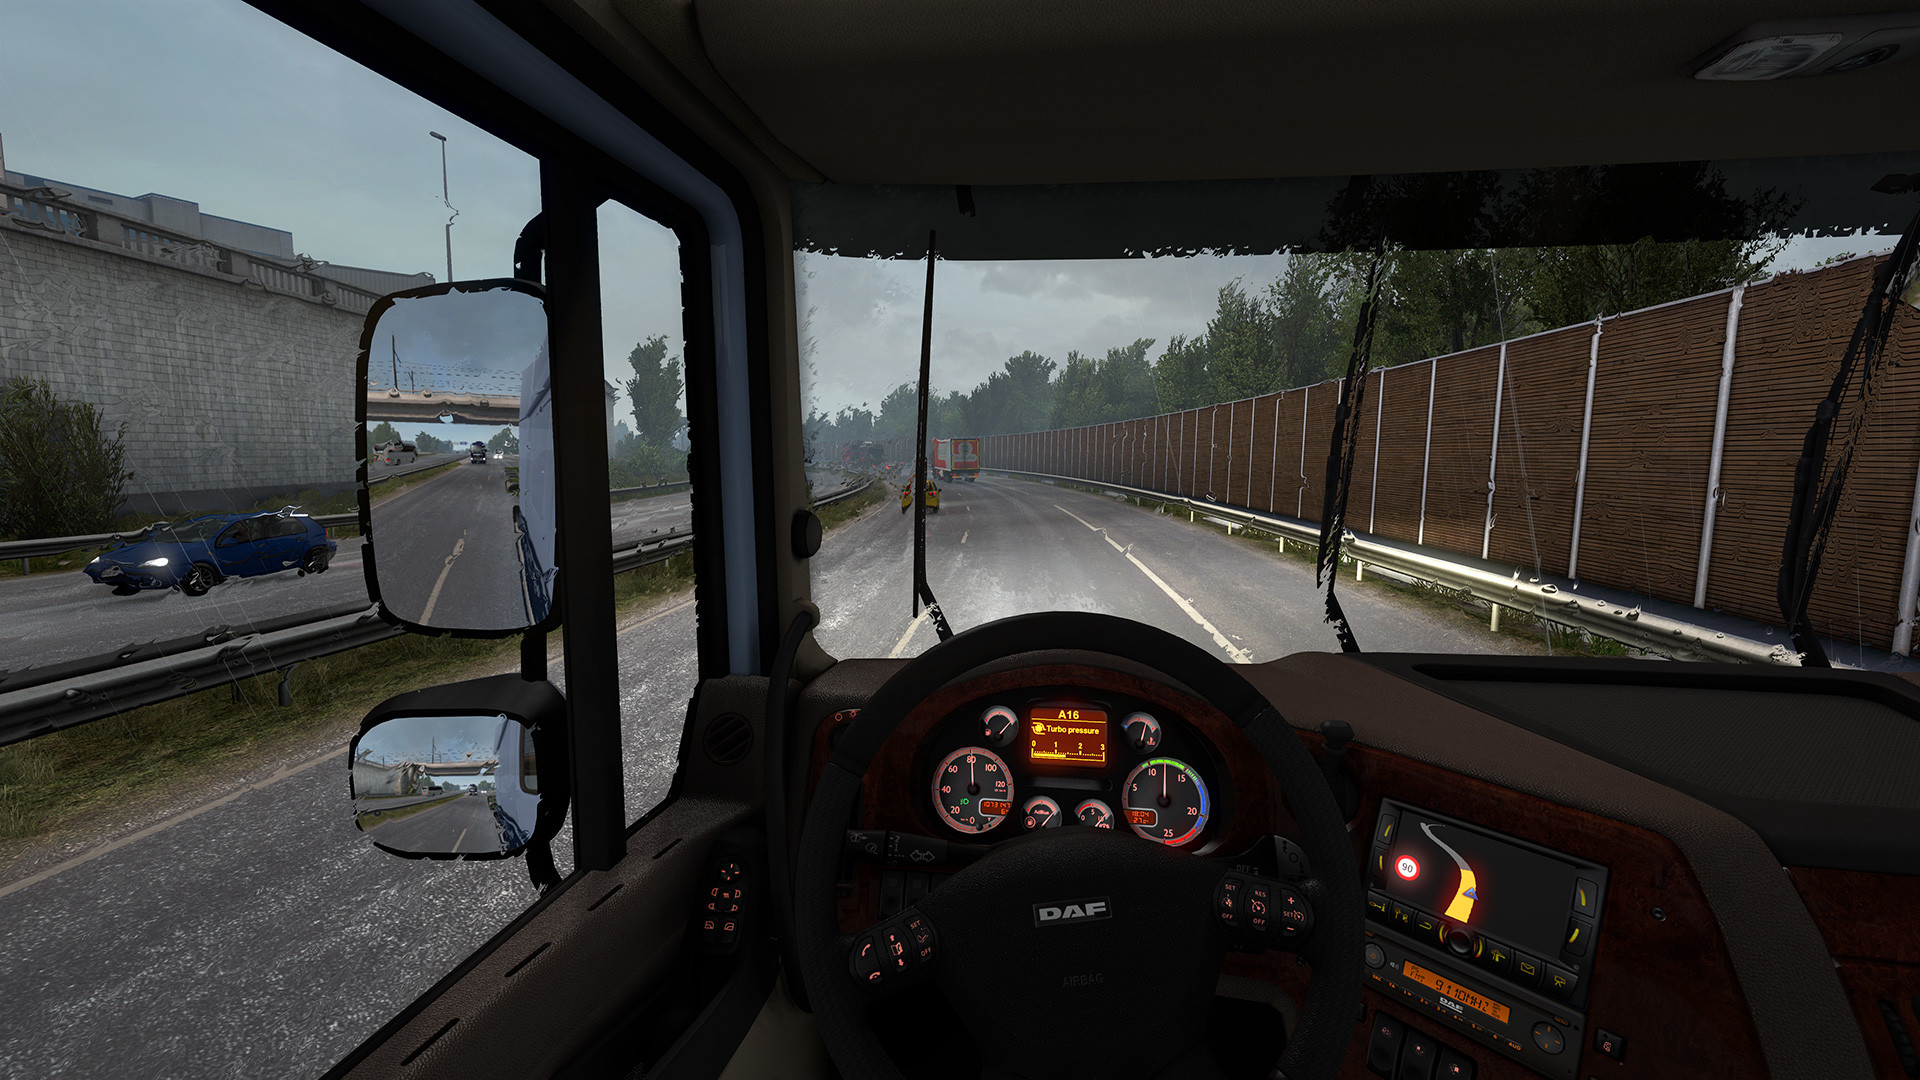 Euro Truck Simulator 2 (2012)